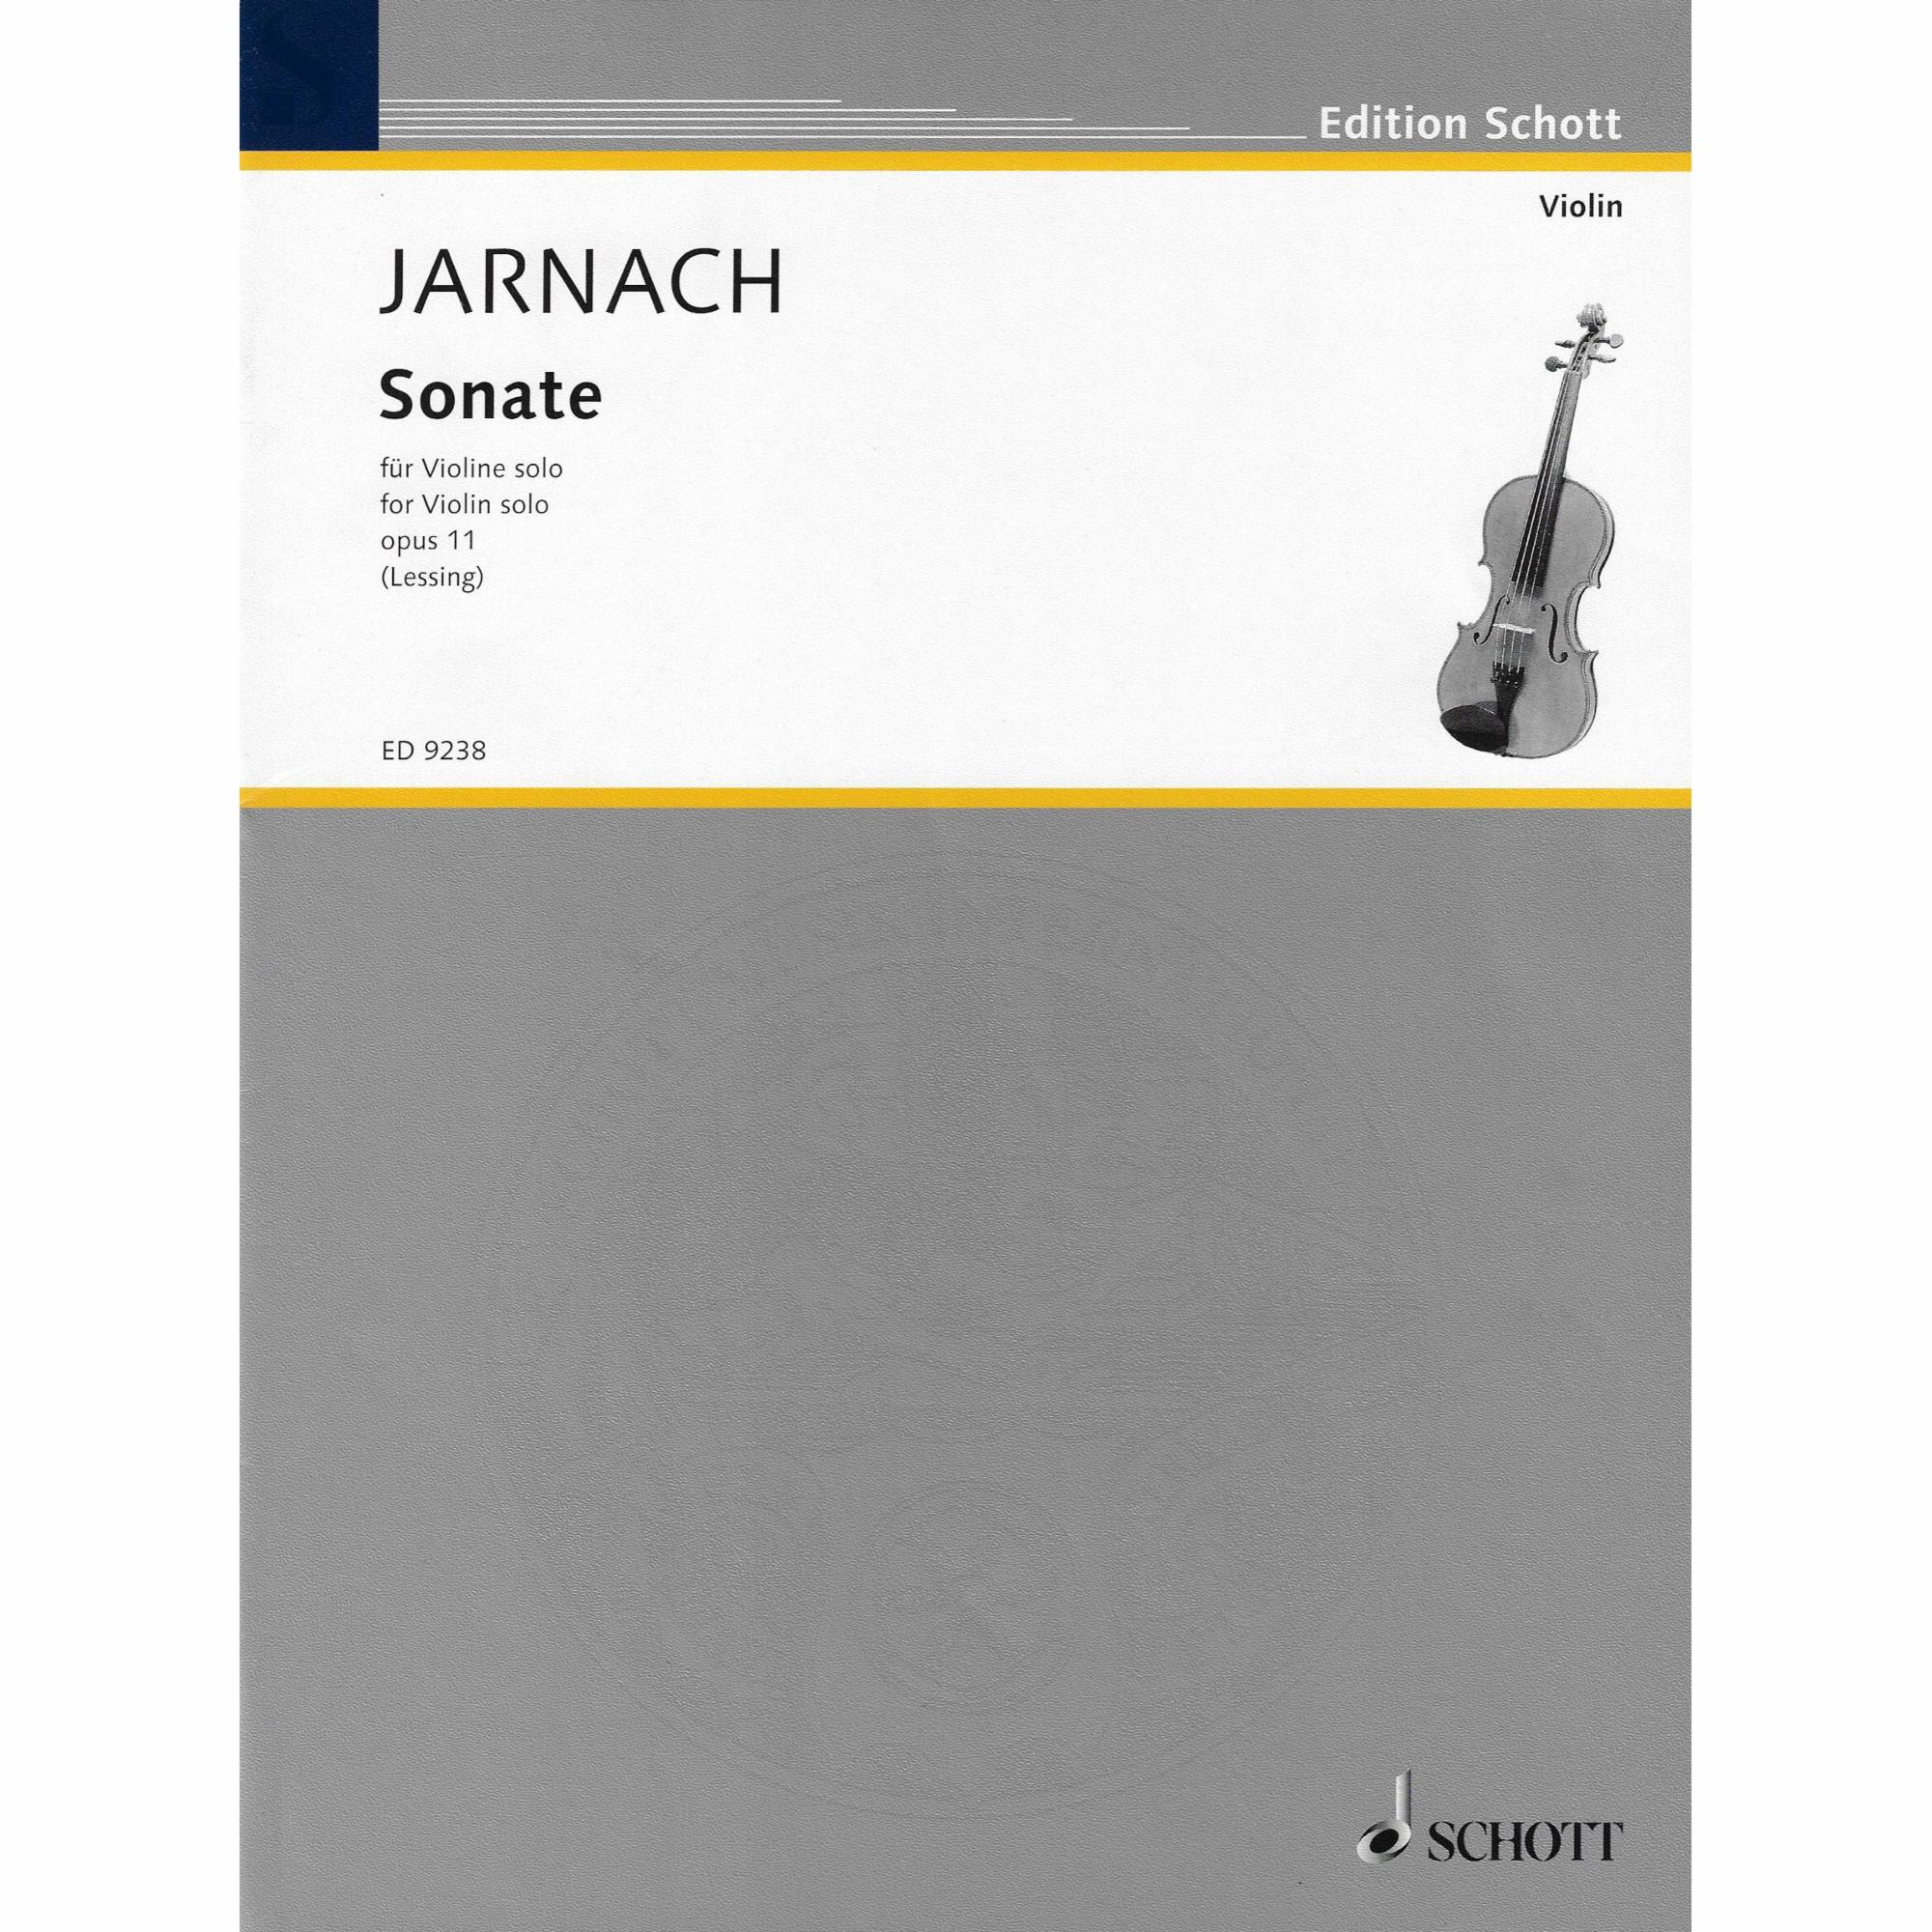 Jarnach -- Sonata, Op. 11 for Solo Violin